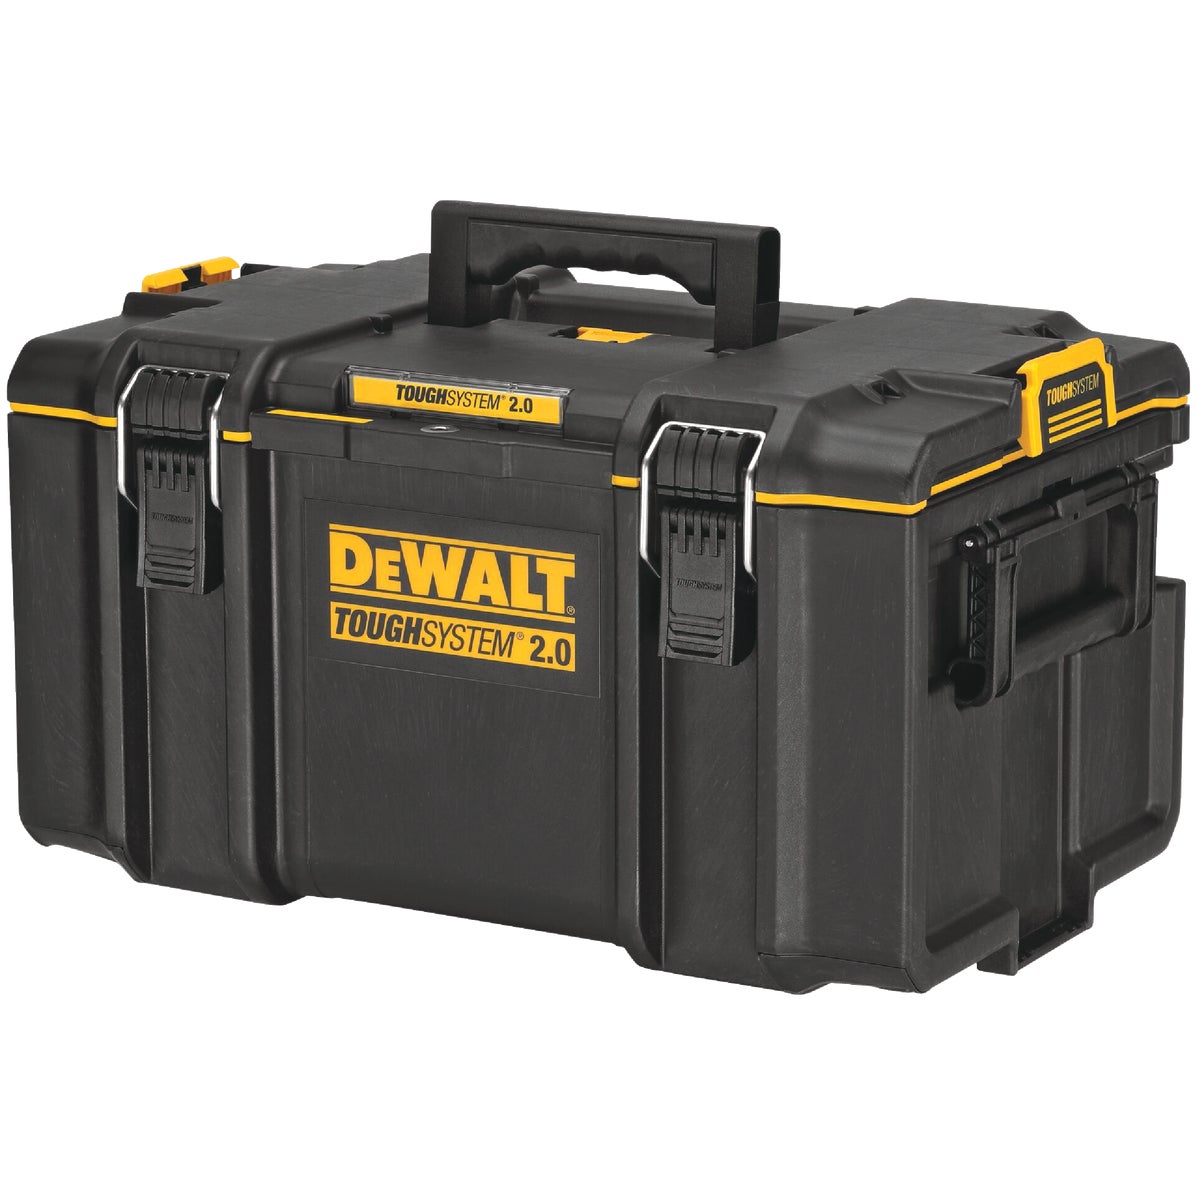 DEWALT ToughSystem 2.0 Large Tool Box, 110 Lb. Capacity